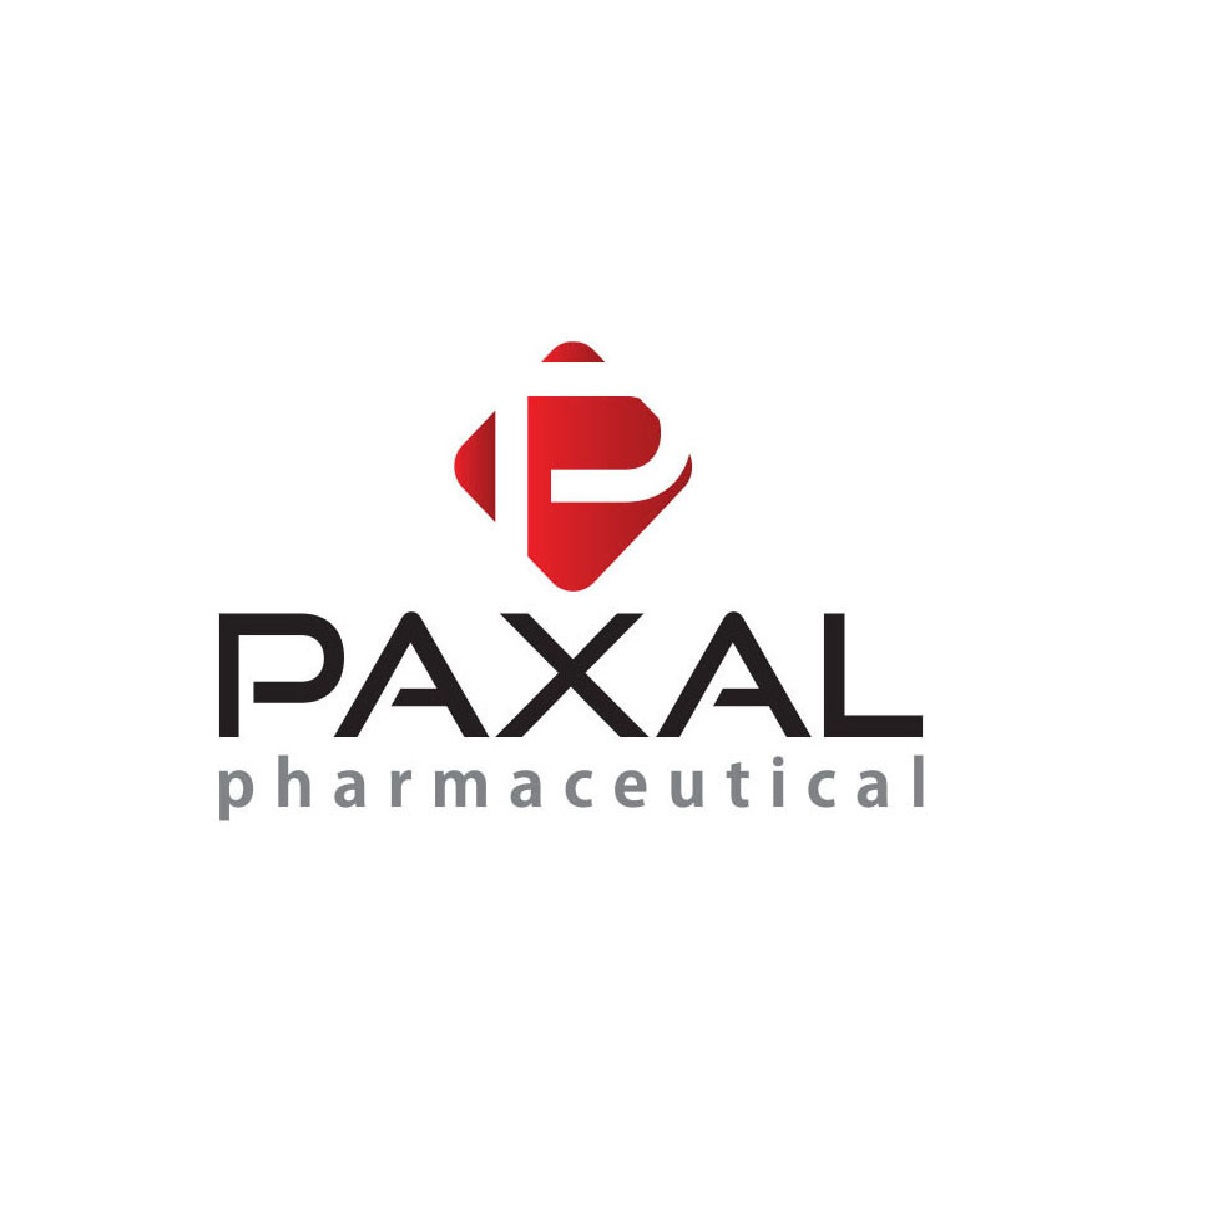 paxal pharma